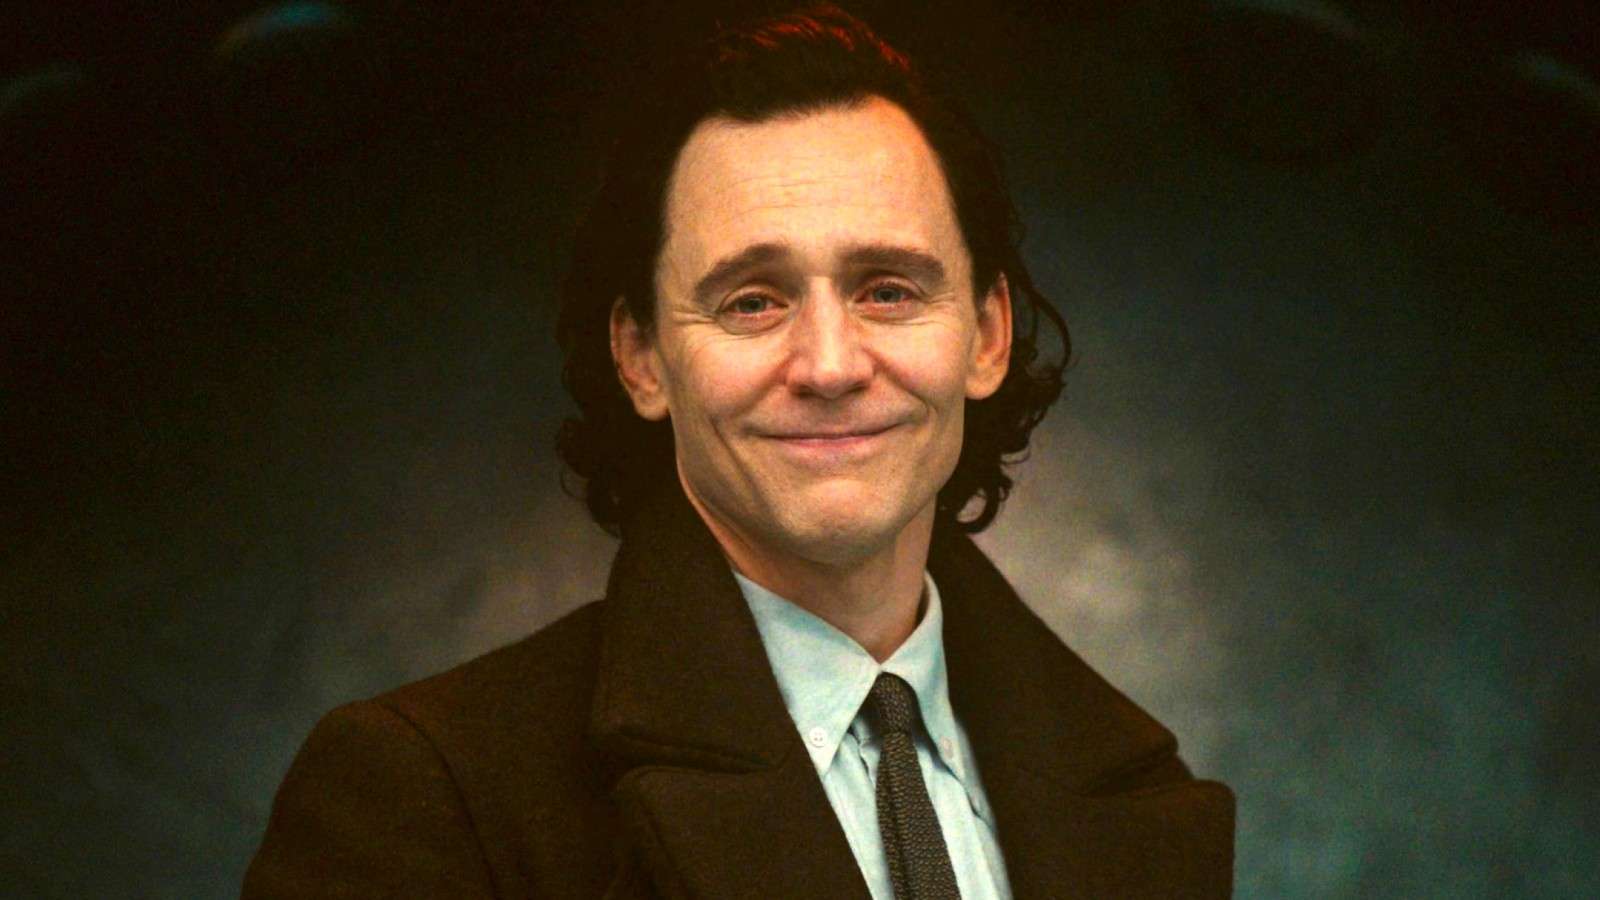 Tom Hiddleston in Loki Season 2 Episode 6